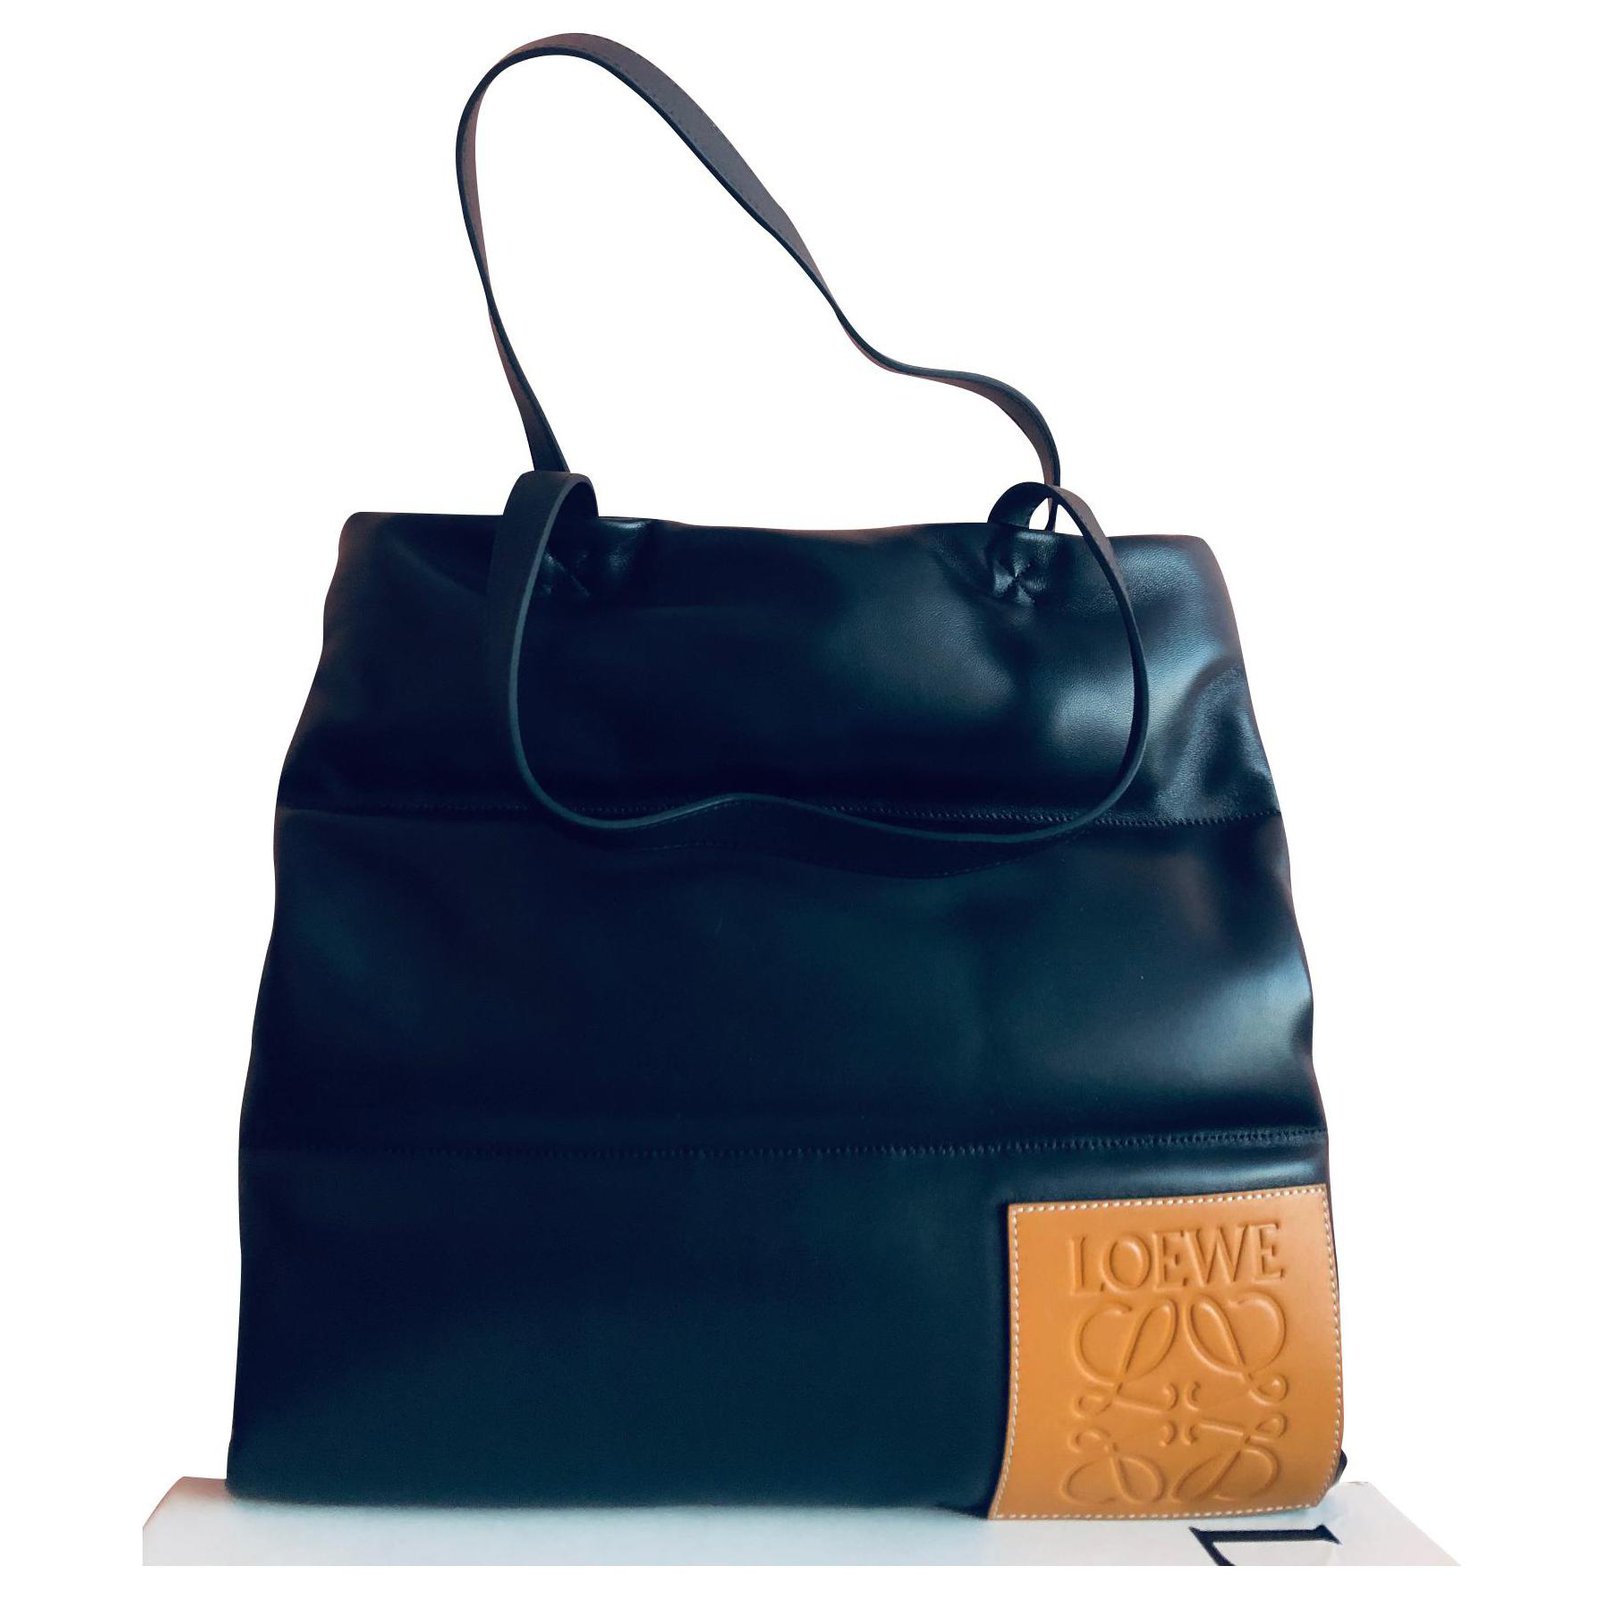 Loewe Leather Tote Deals, 54% OFF | www.emanagreen.com